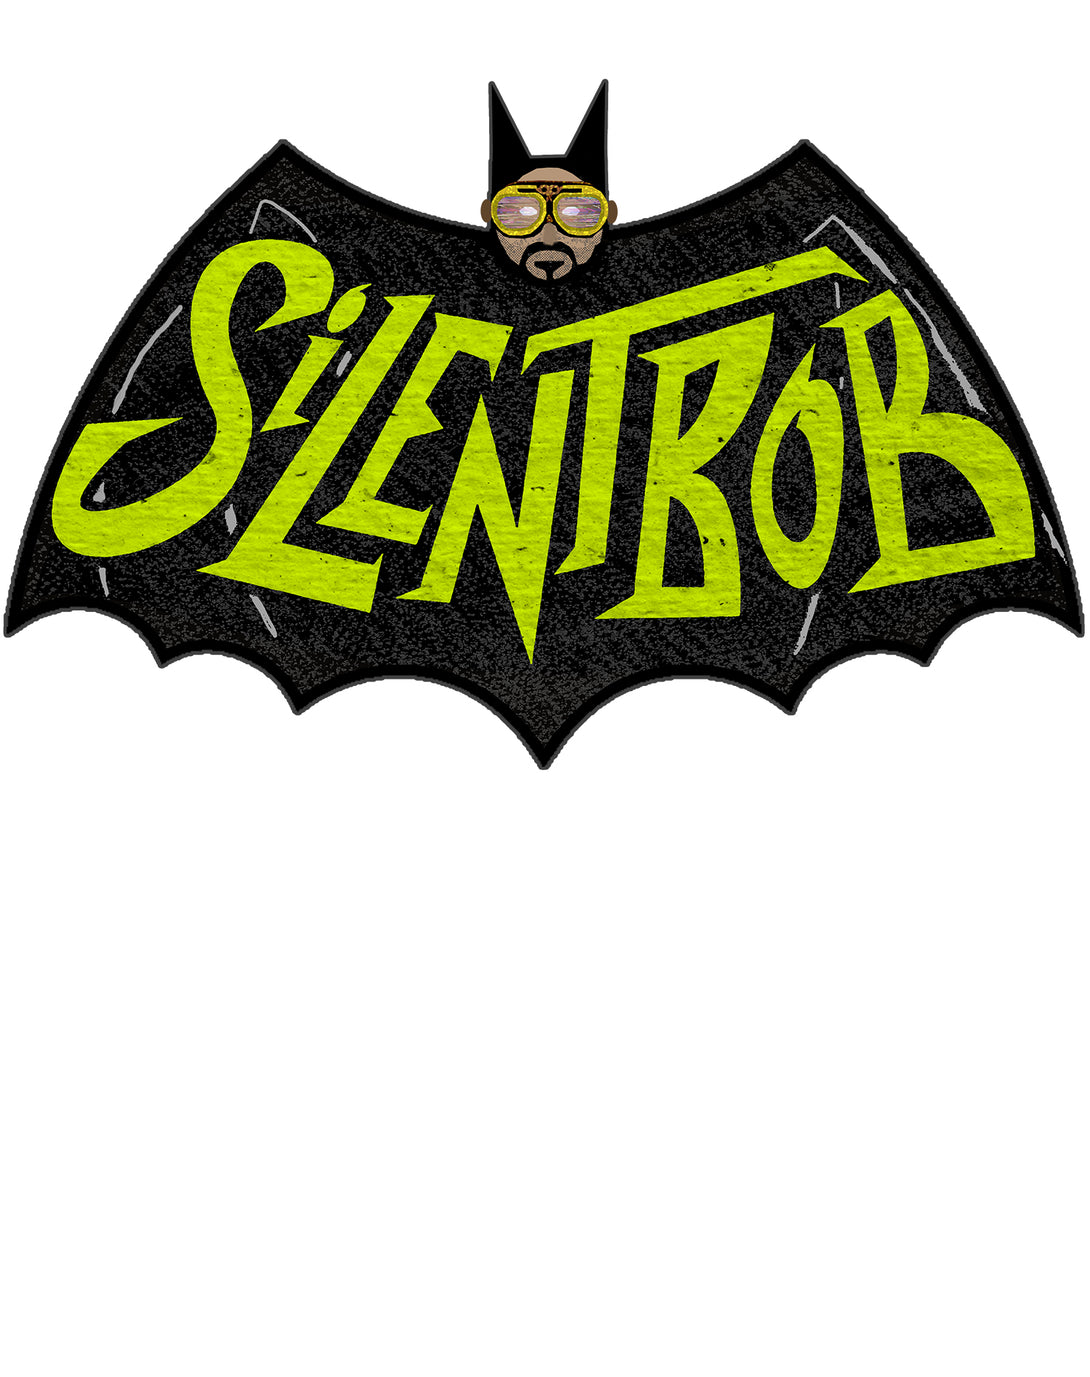 Kevin Smith View Askewniverse Logo Silent Bat Bob Official Women's T-Shirt White - Urban Species Design Close Up